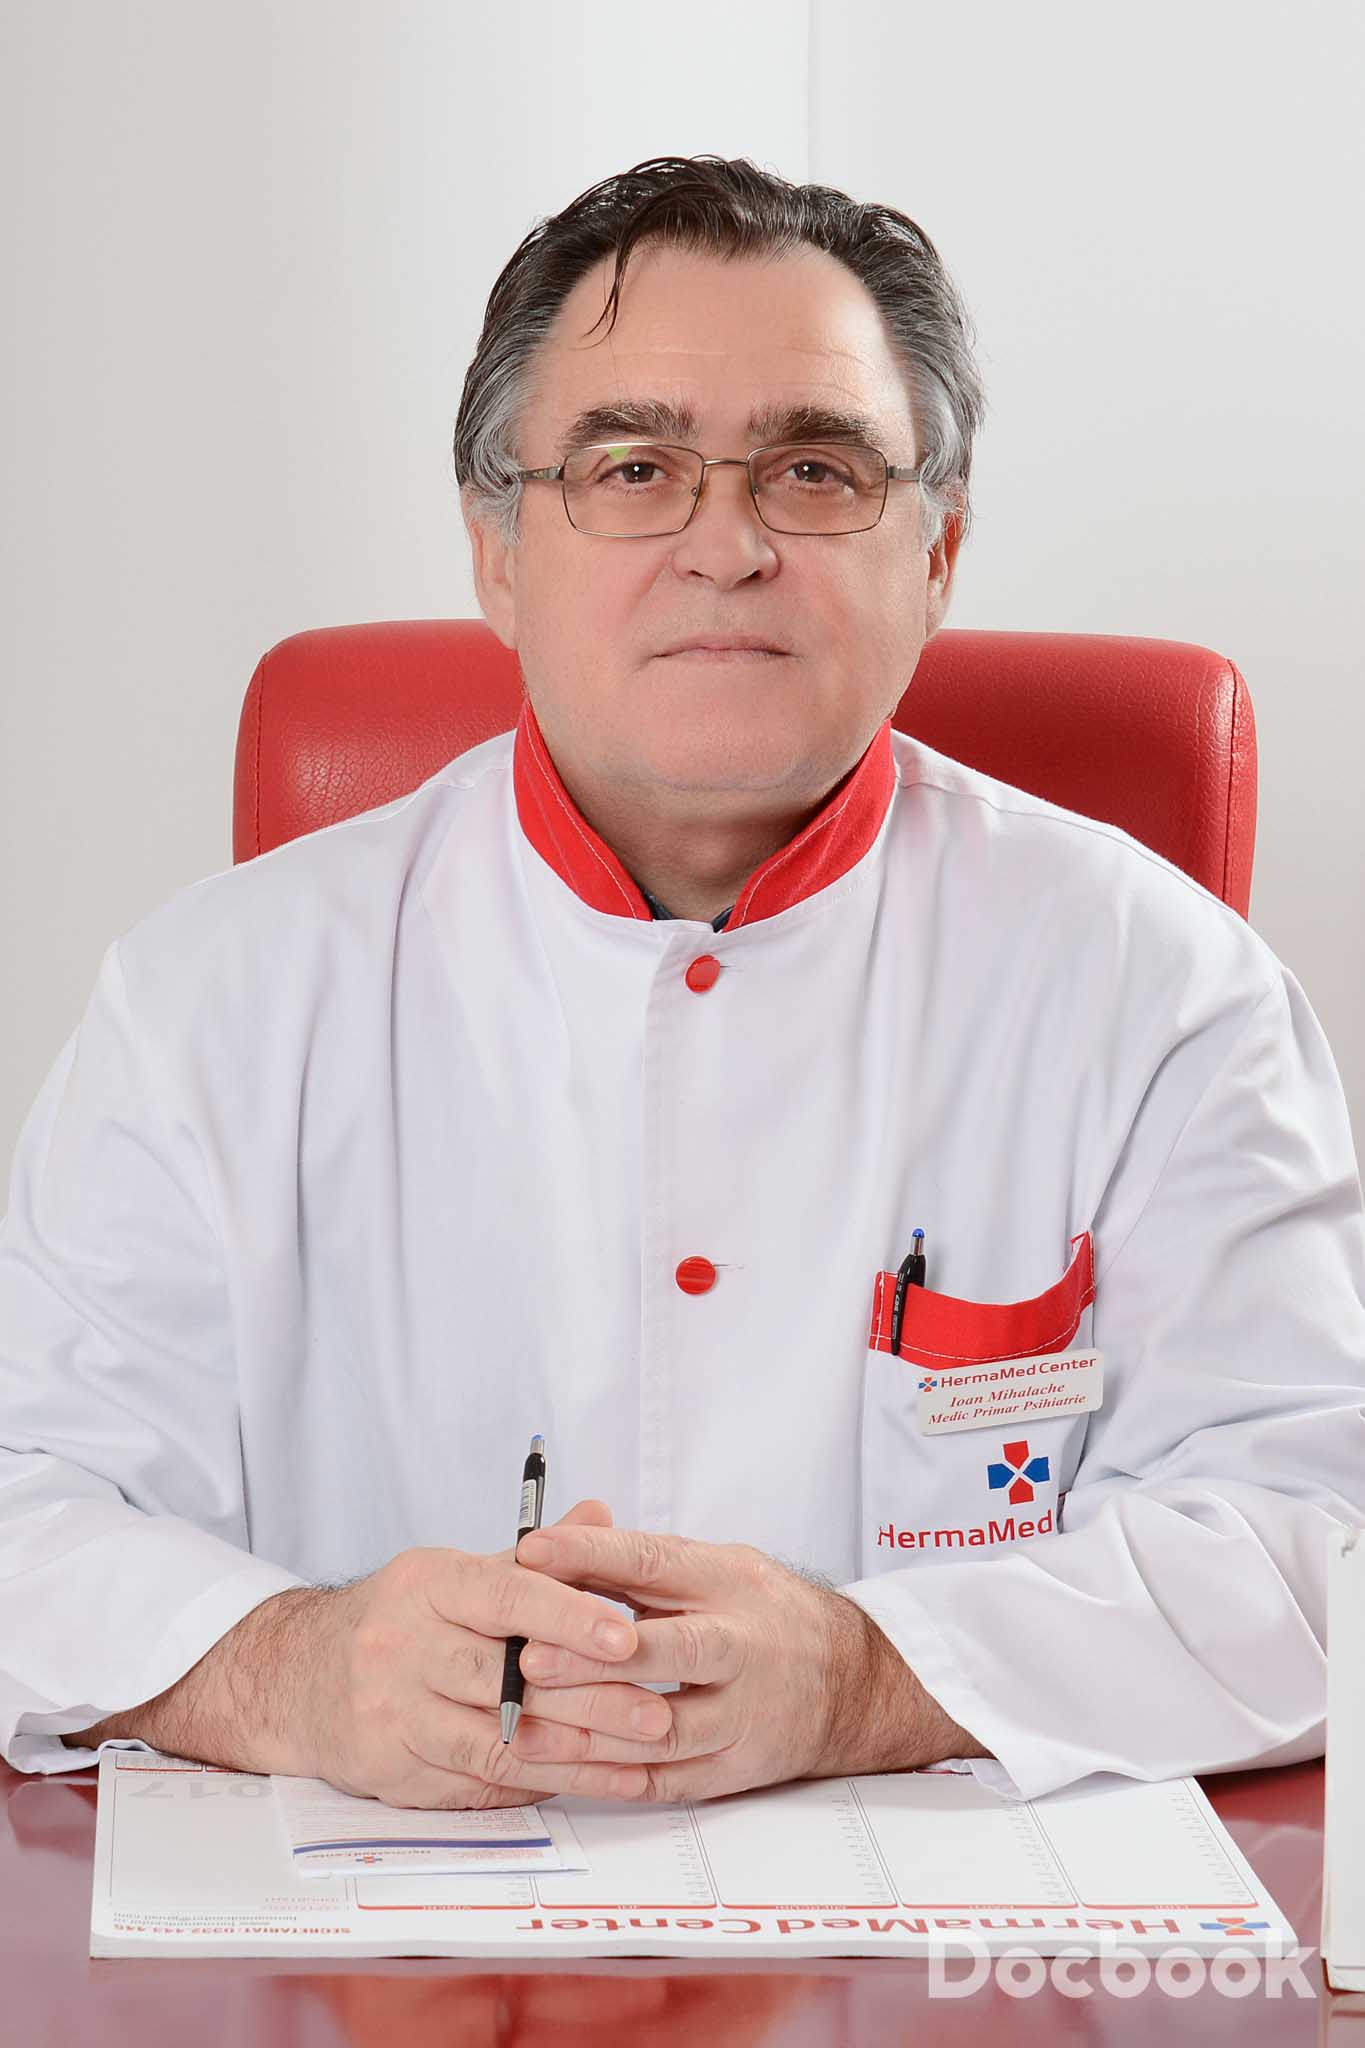 Dr. Ioan Mihalache